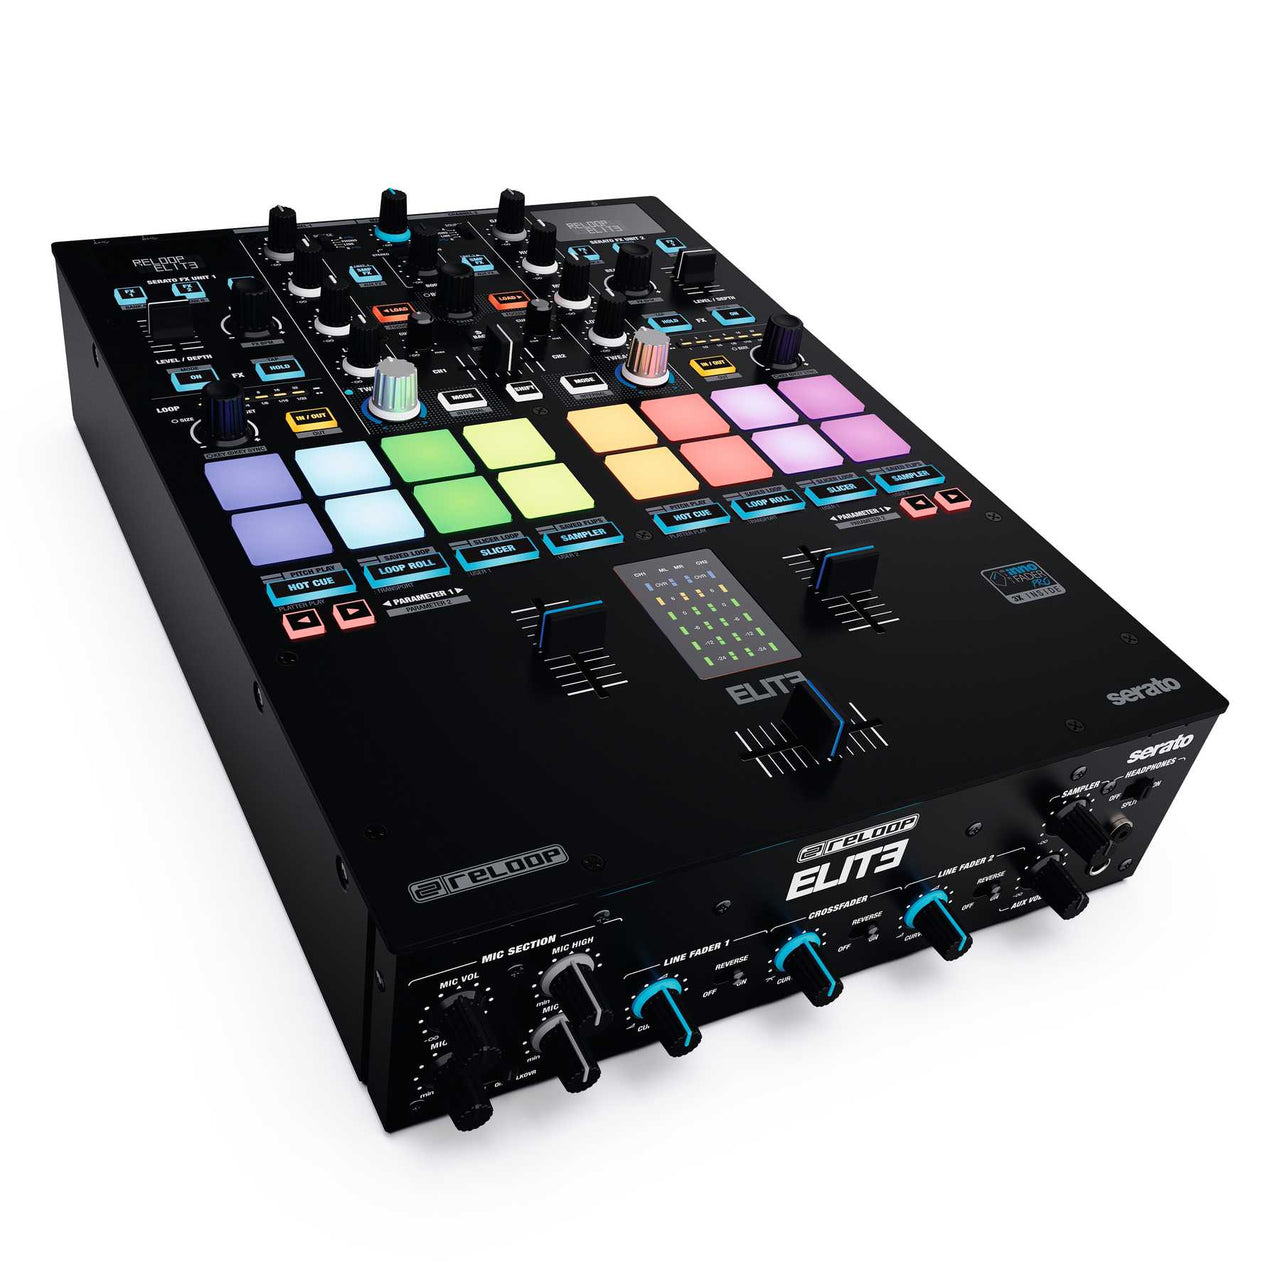 Reloop ELITE  High Performance DVS Mixer for Serato DJ Pro